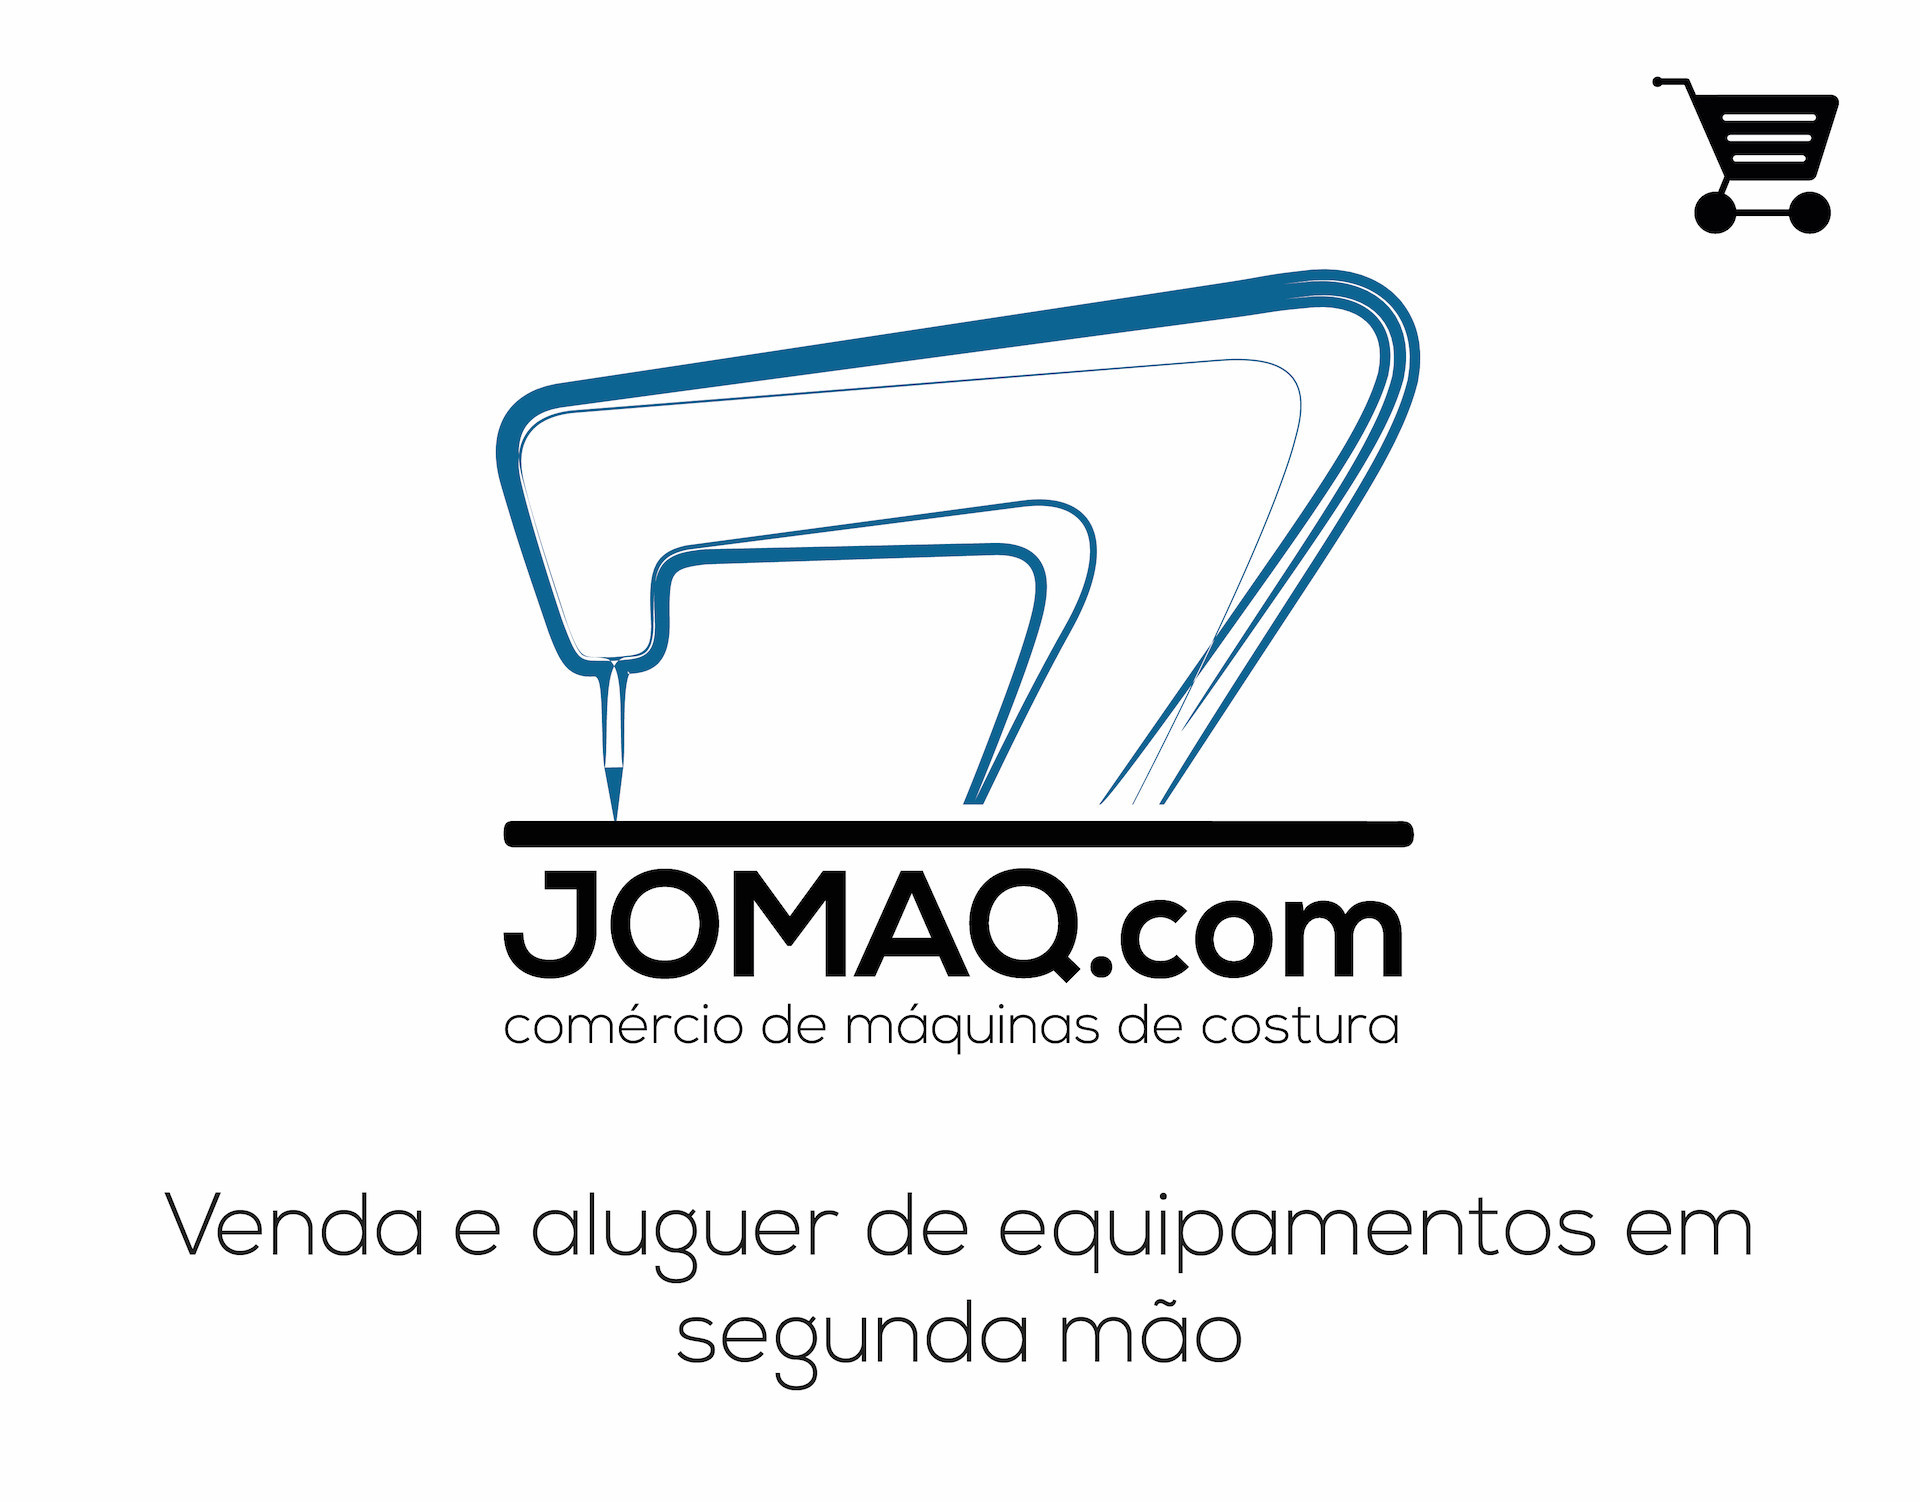 Loja Online - Jomaq.com